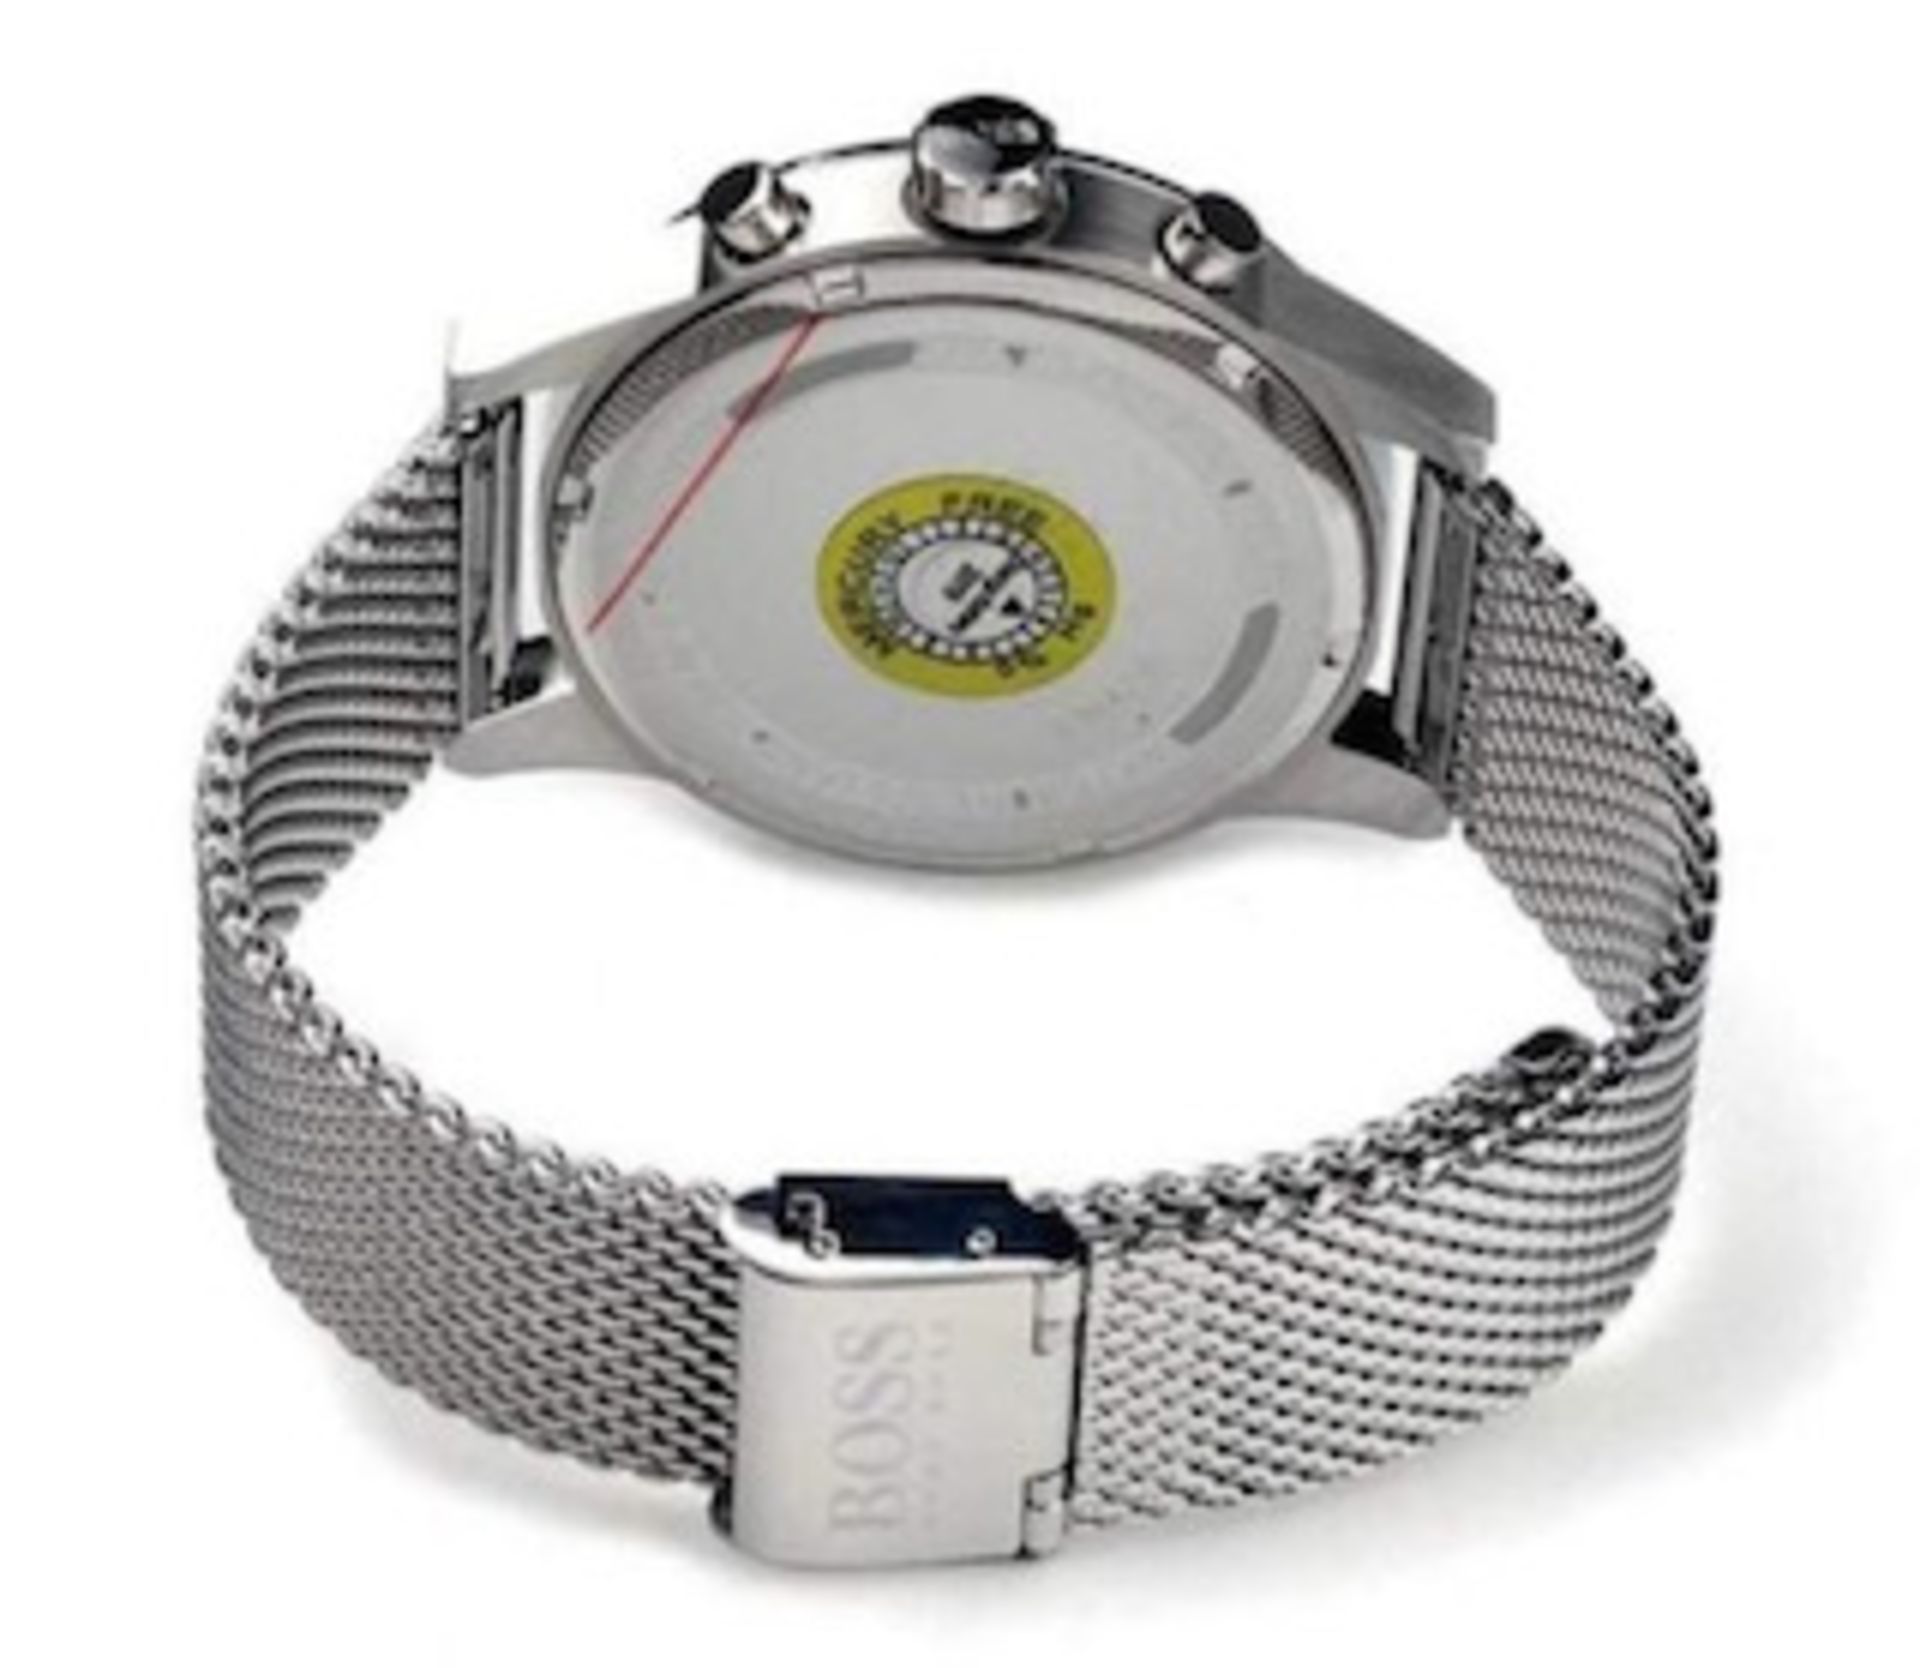 Hugo Boss 1513440 Men's Jet Silver Mesh Band Chronograph Watch - Image 4 of 5